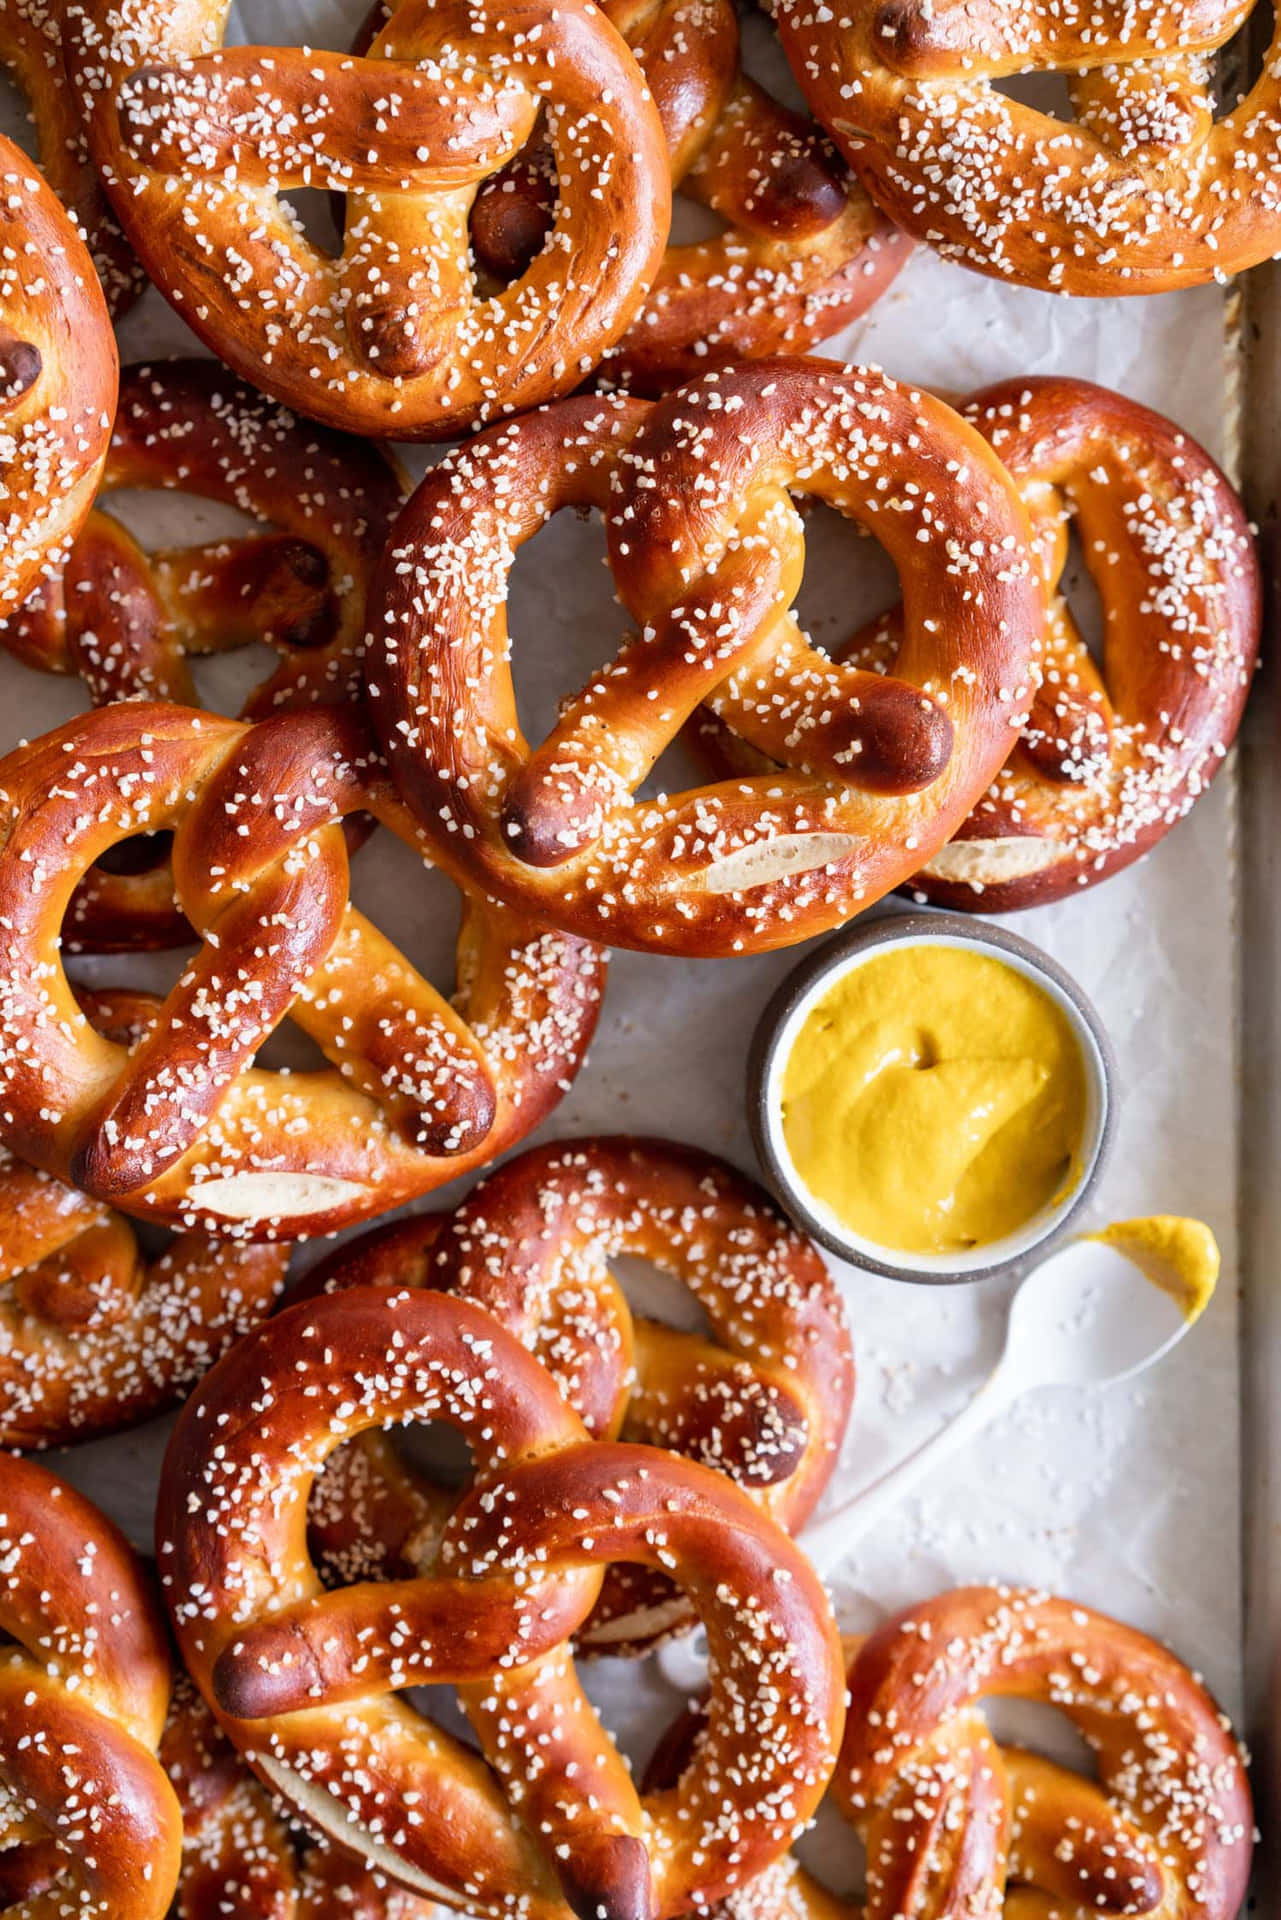 Enjoy a warm pretzel on a cool day.